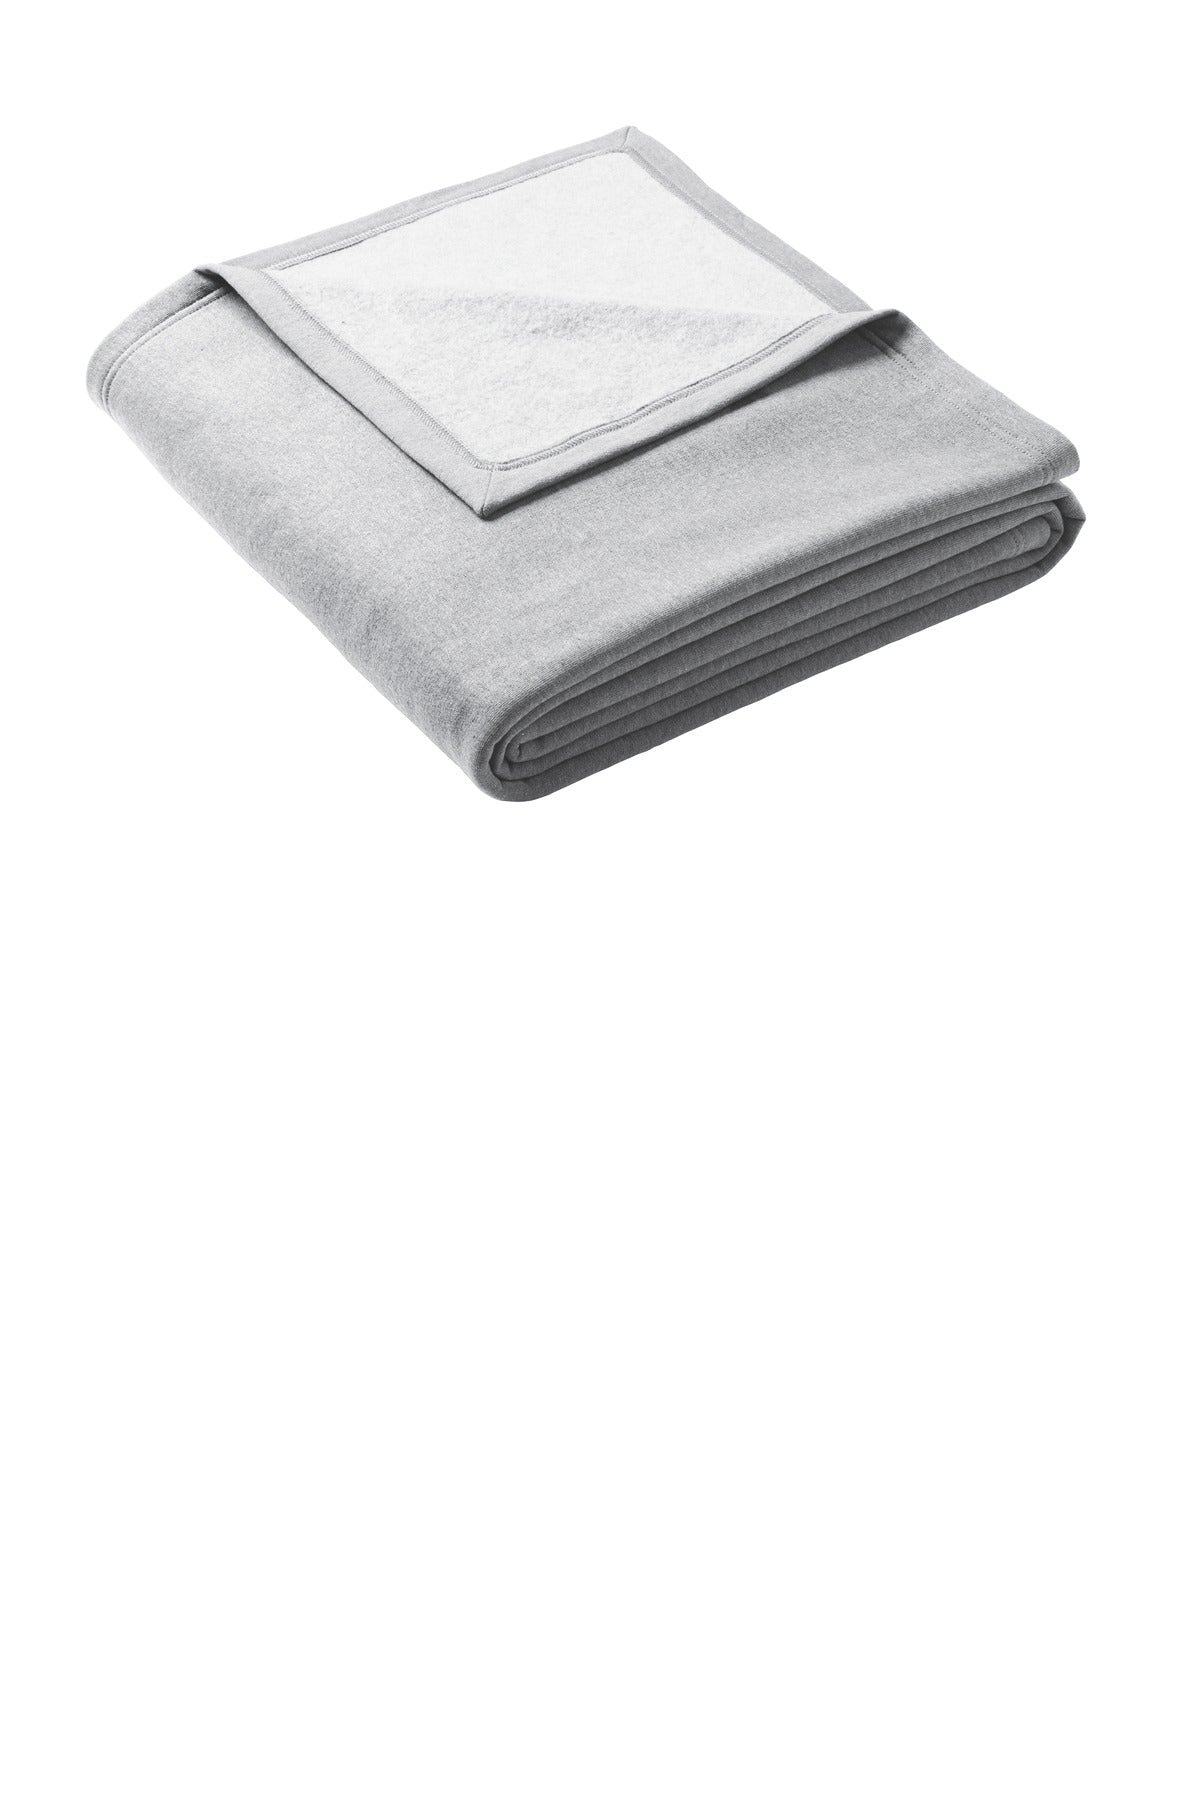 Port & Company® Oversized Core Fleece Sweatshirt Blanket BP79 - DFW Impression